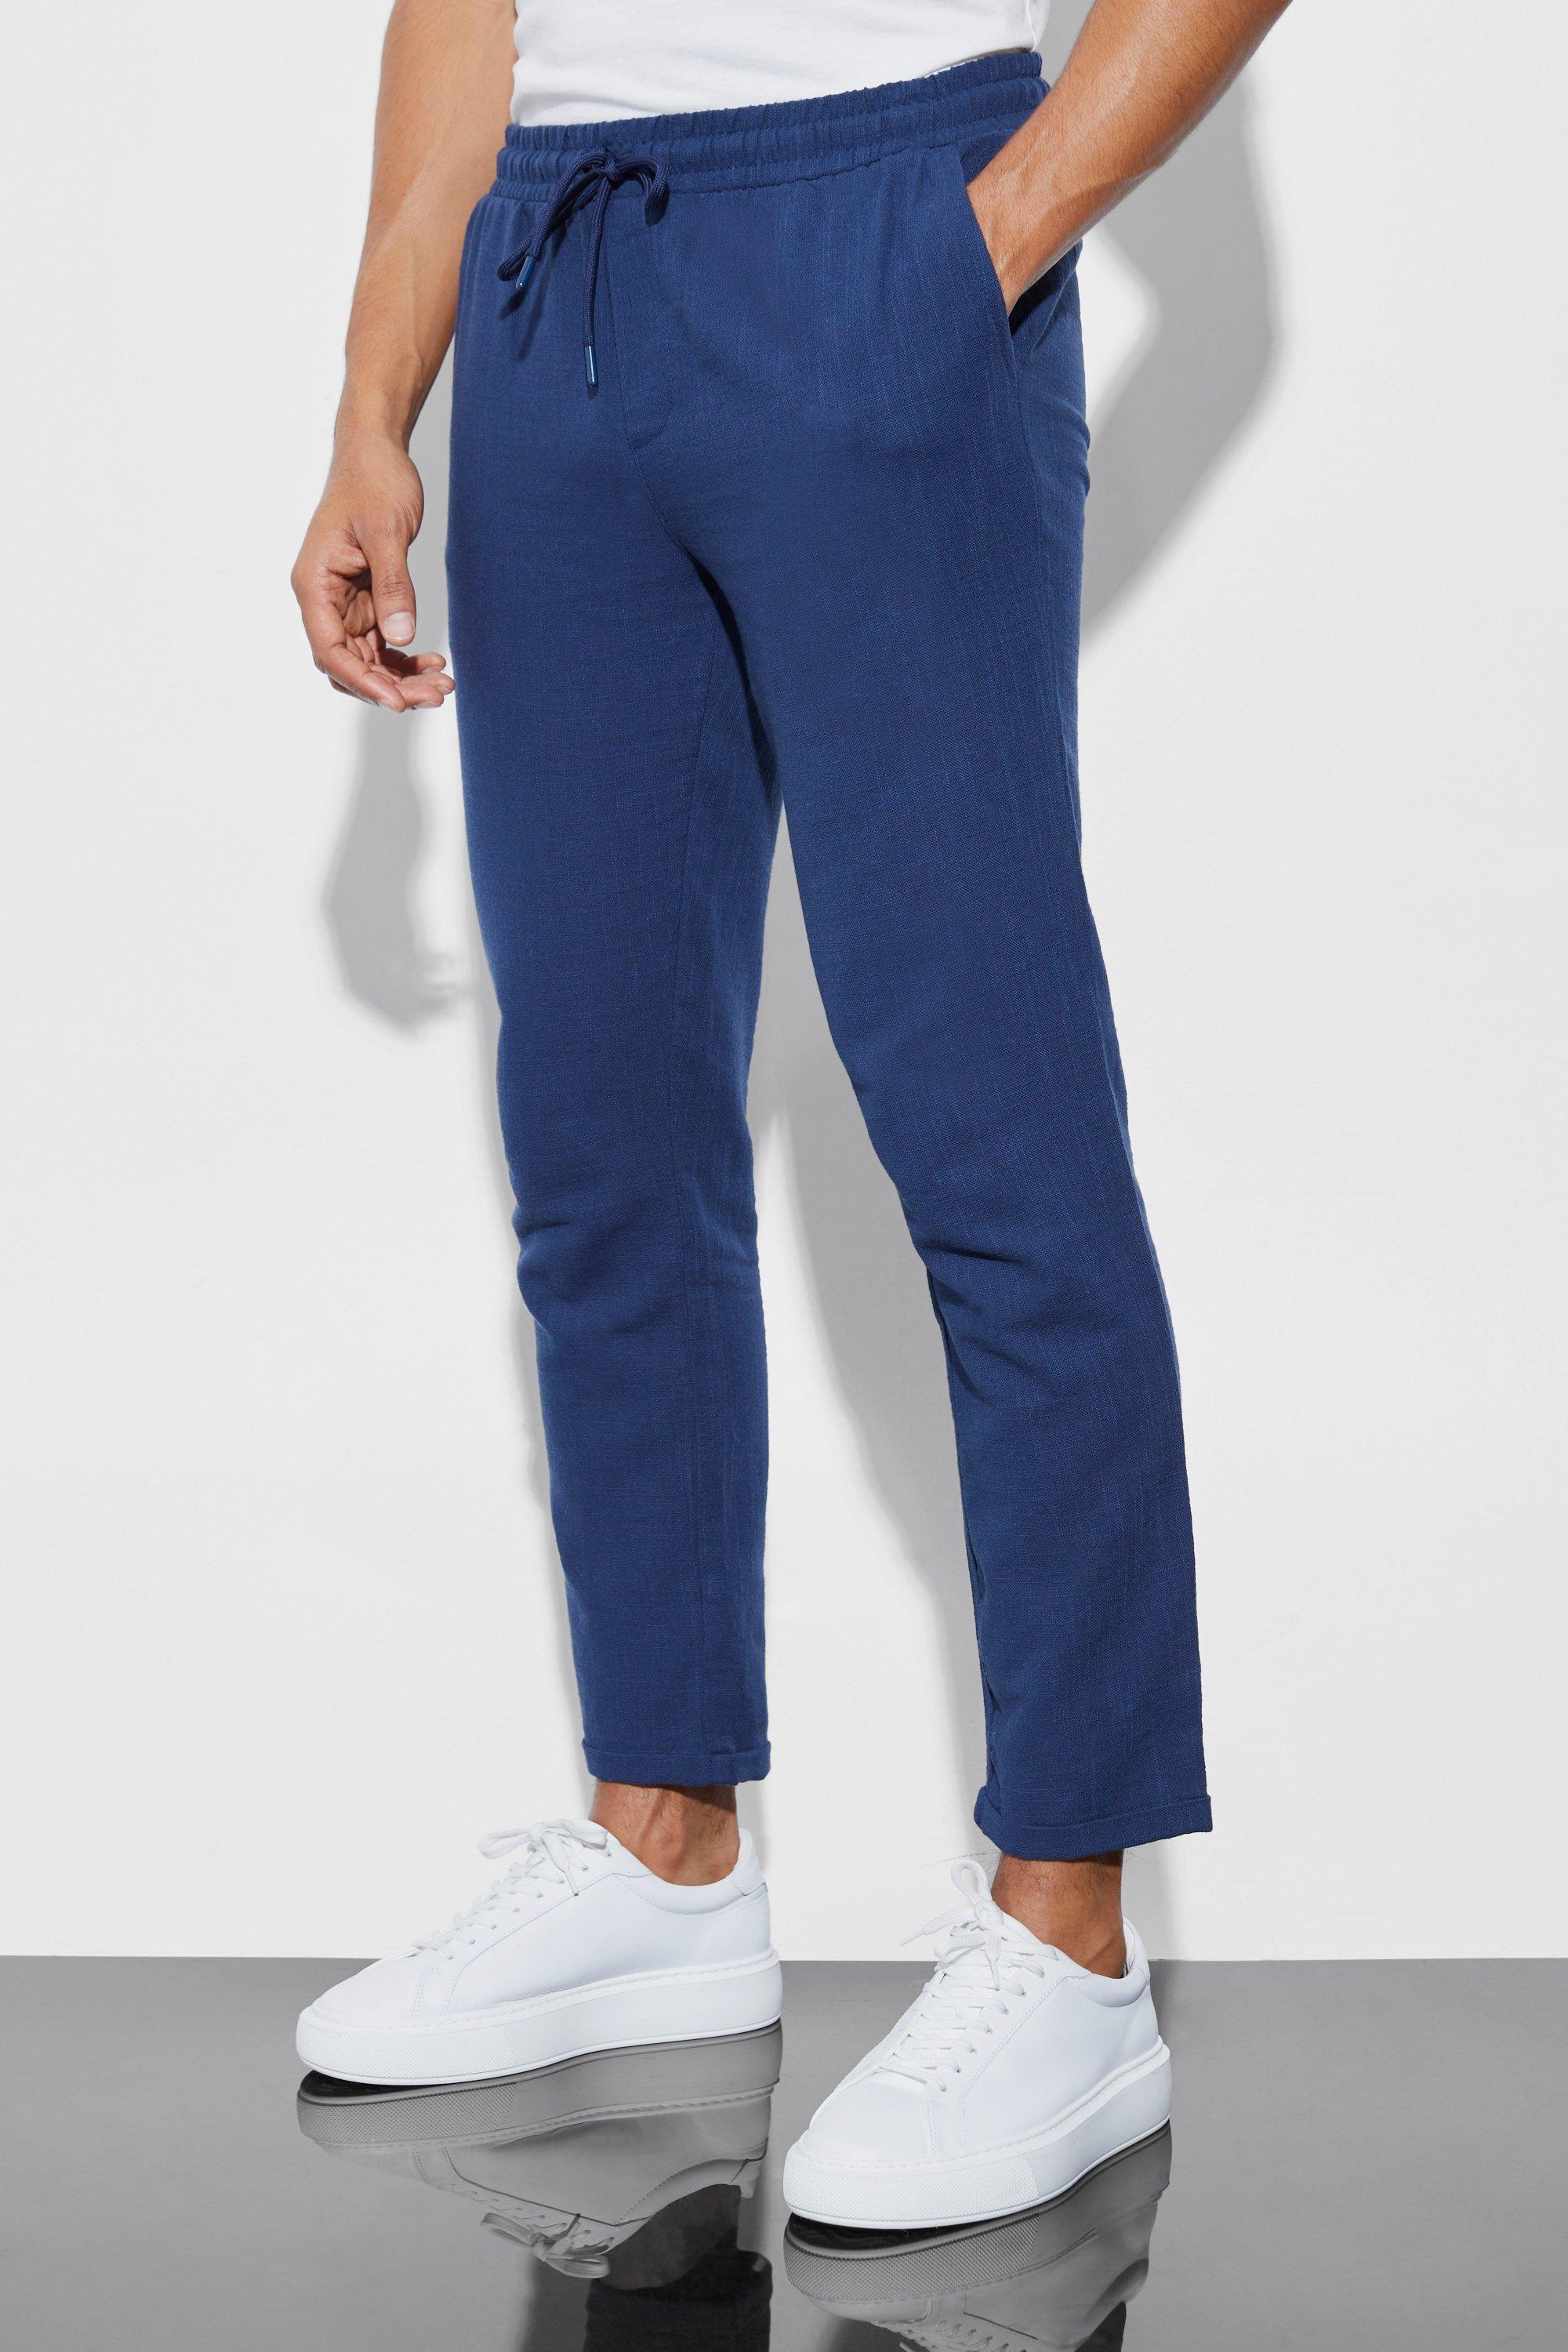 pantalon de costume court homme - bleu - xl, bleu